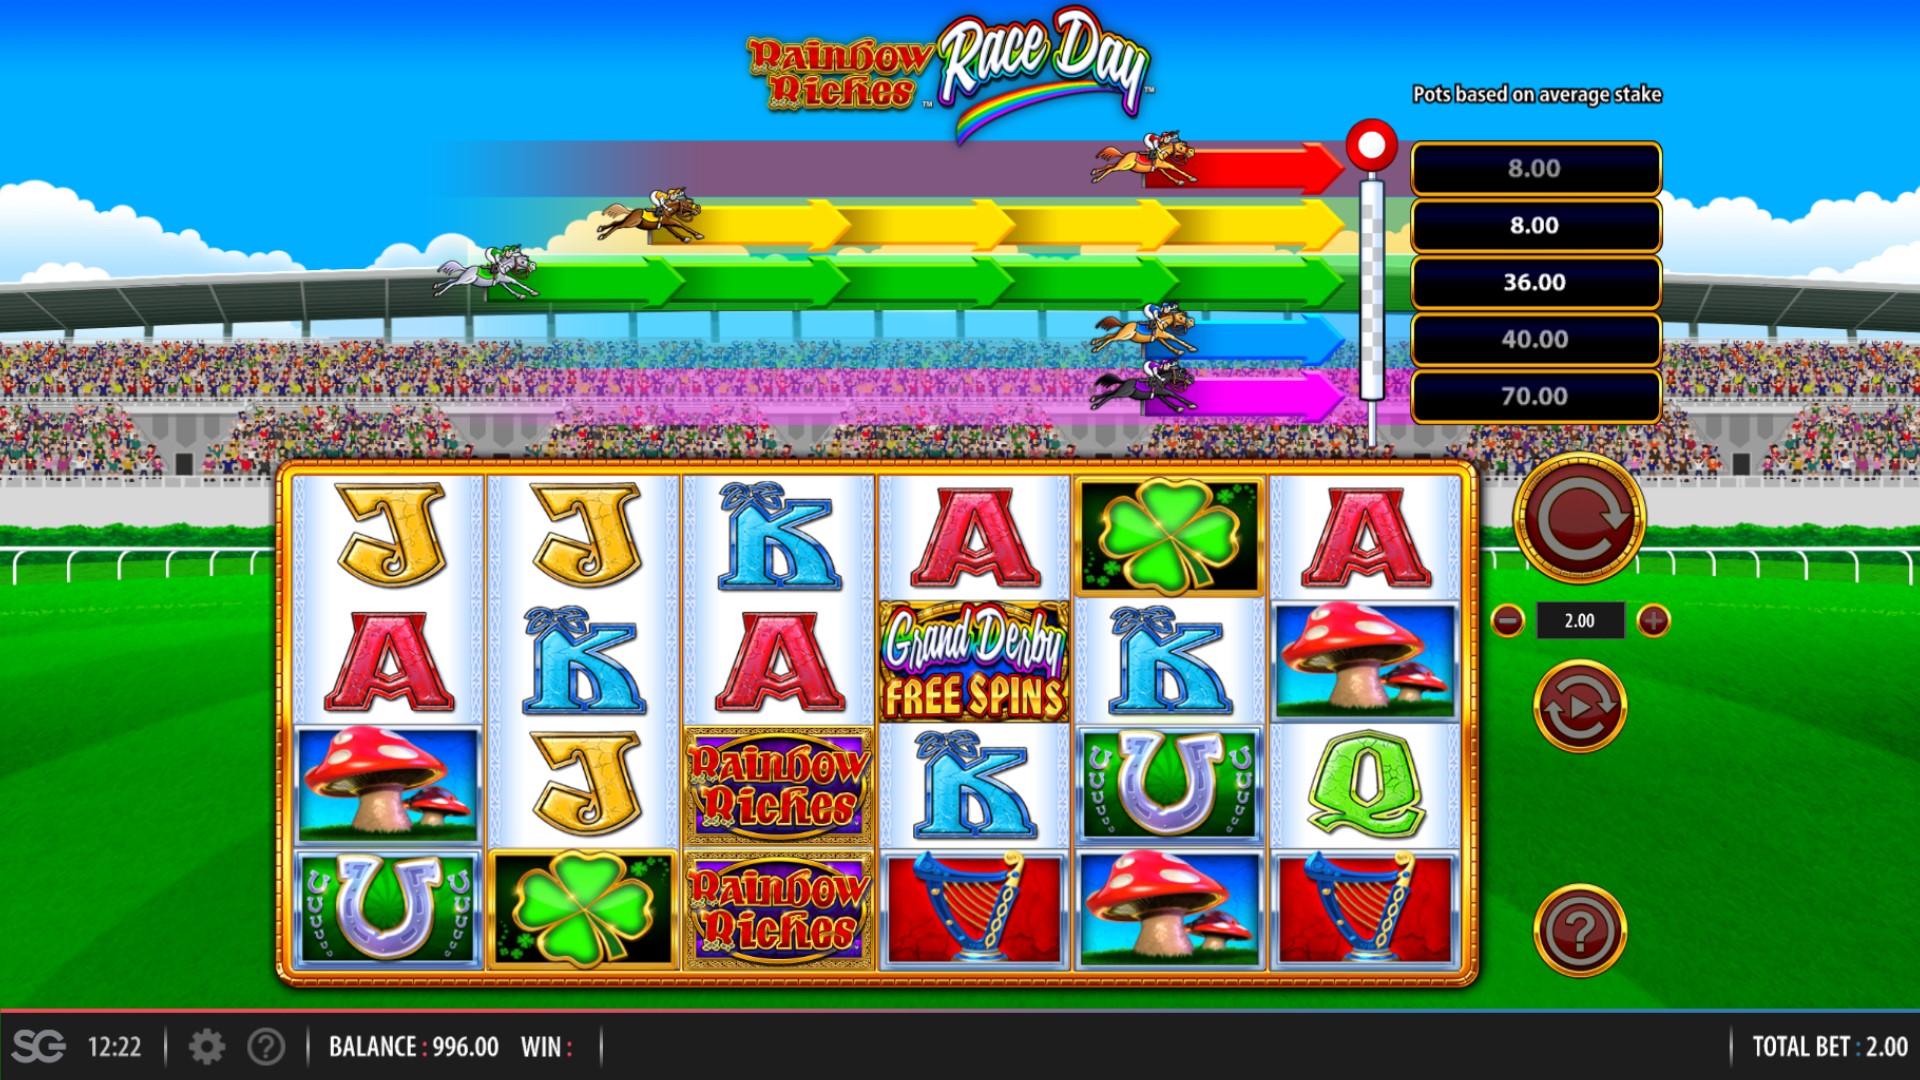 Rainbow Riches Race Day 3 SG Digital